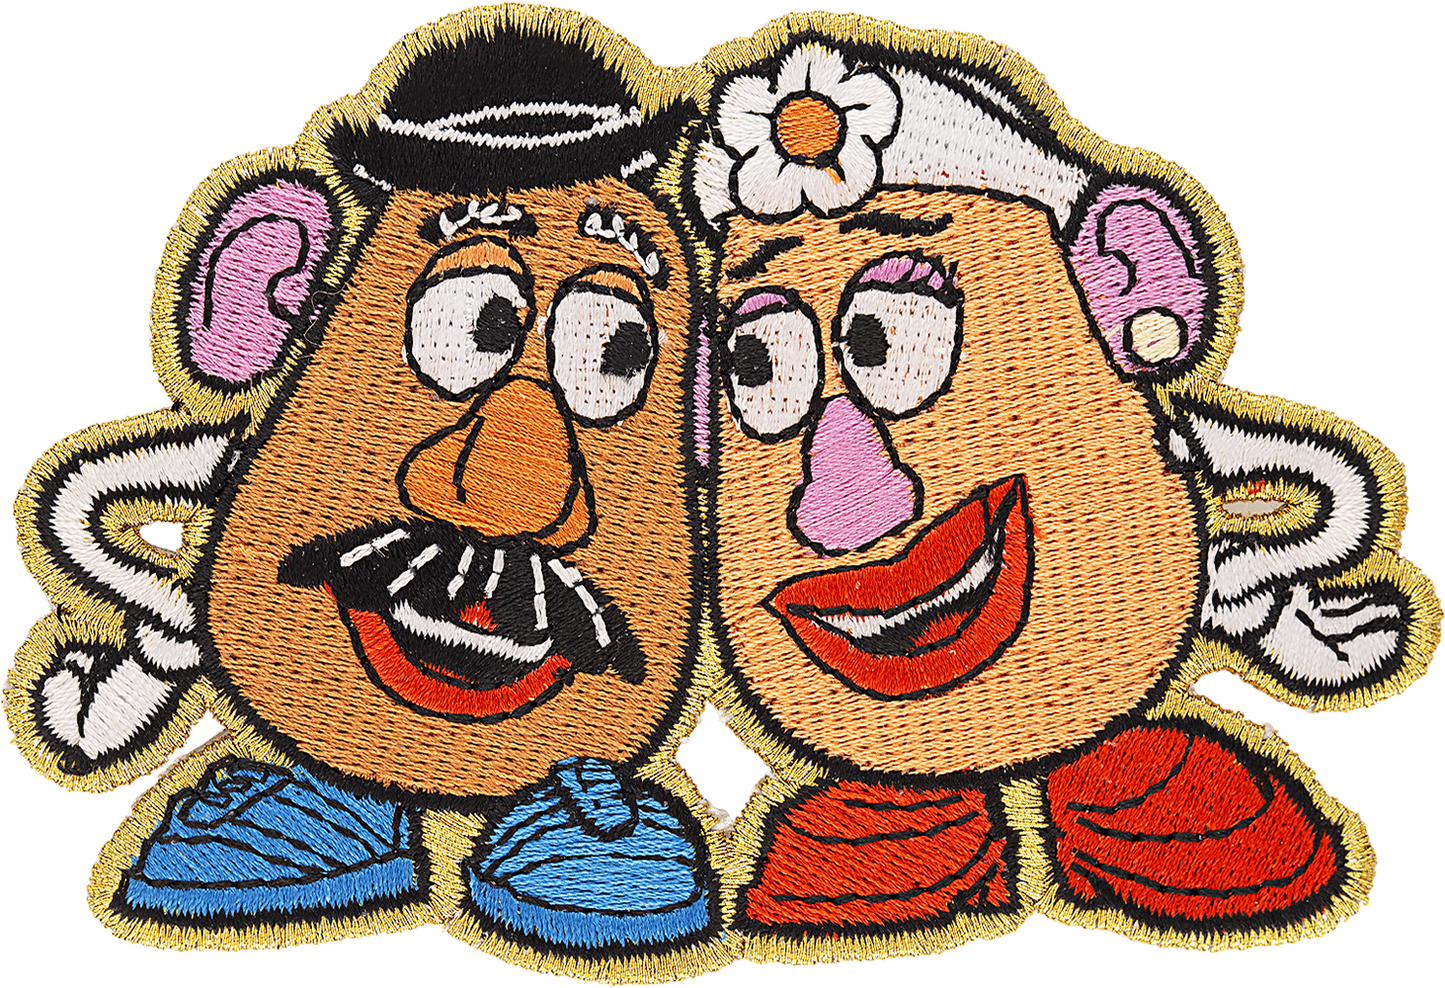 Mr. & Mrs. Potato Head Patch